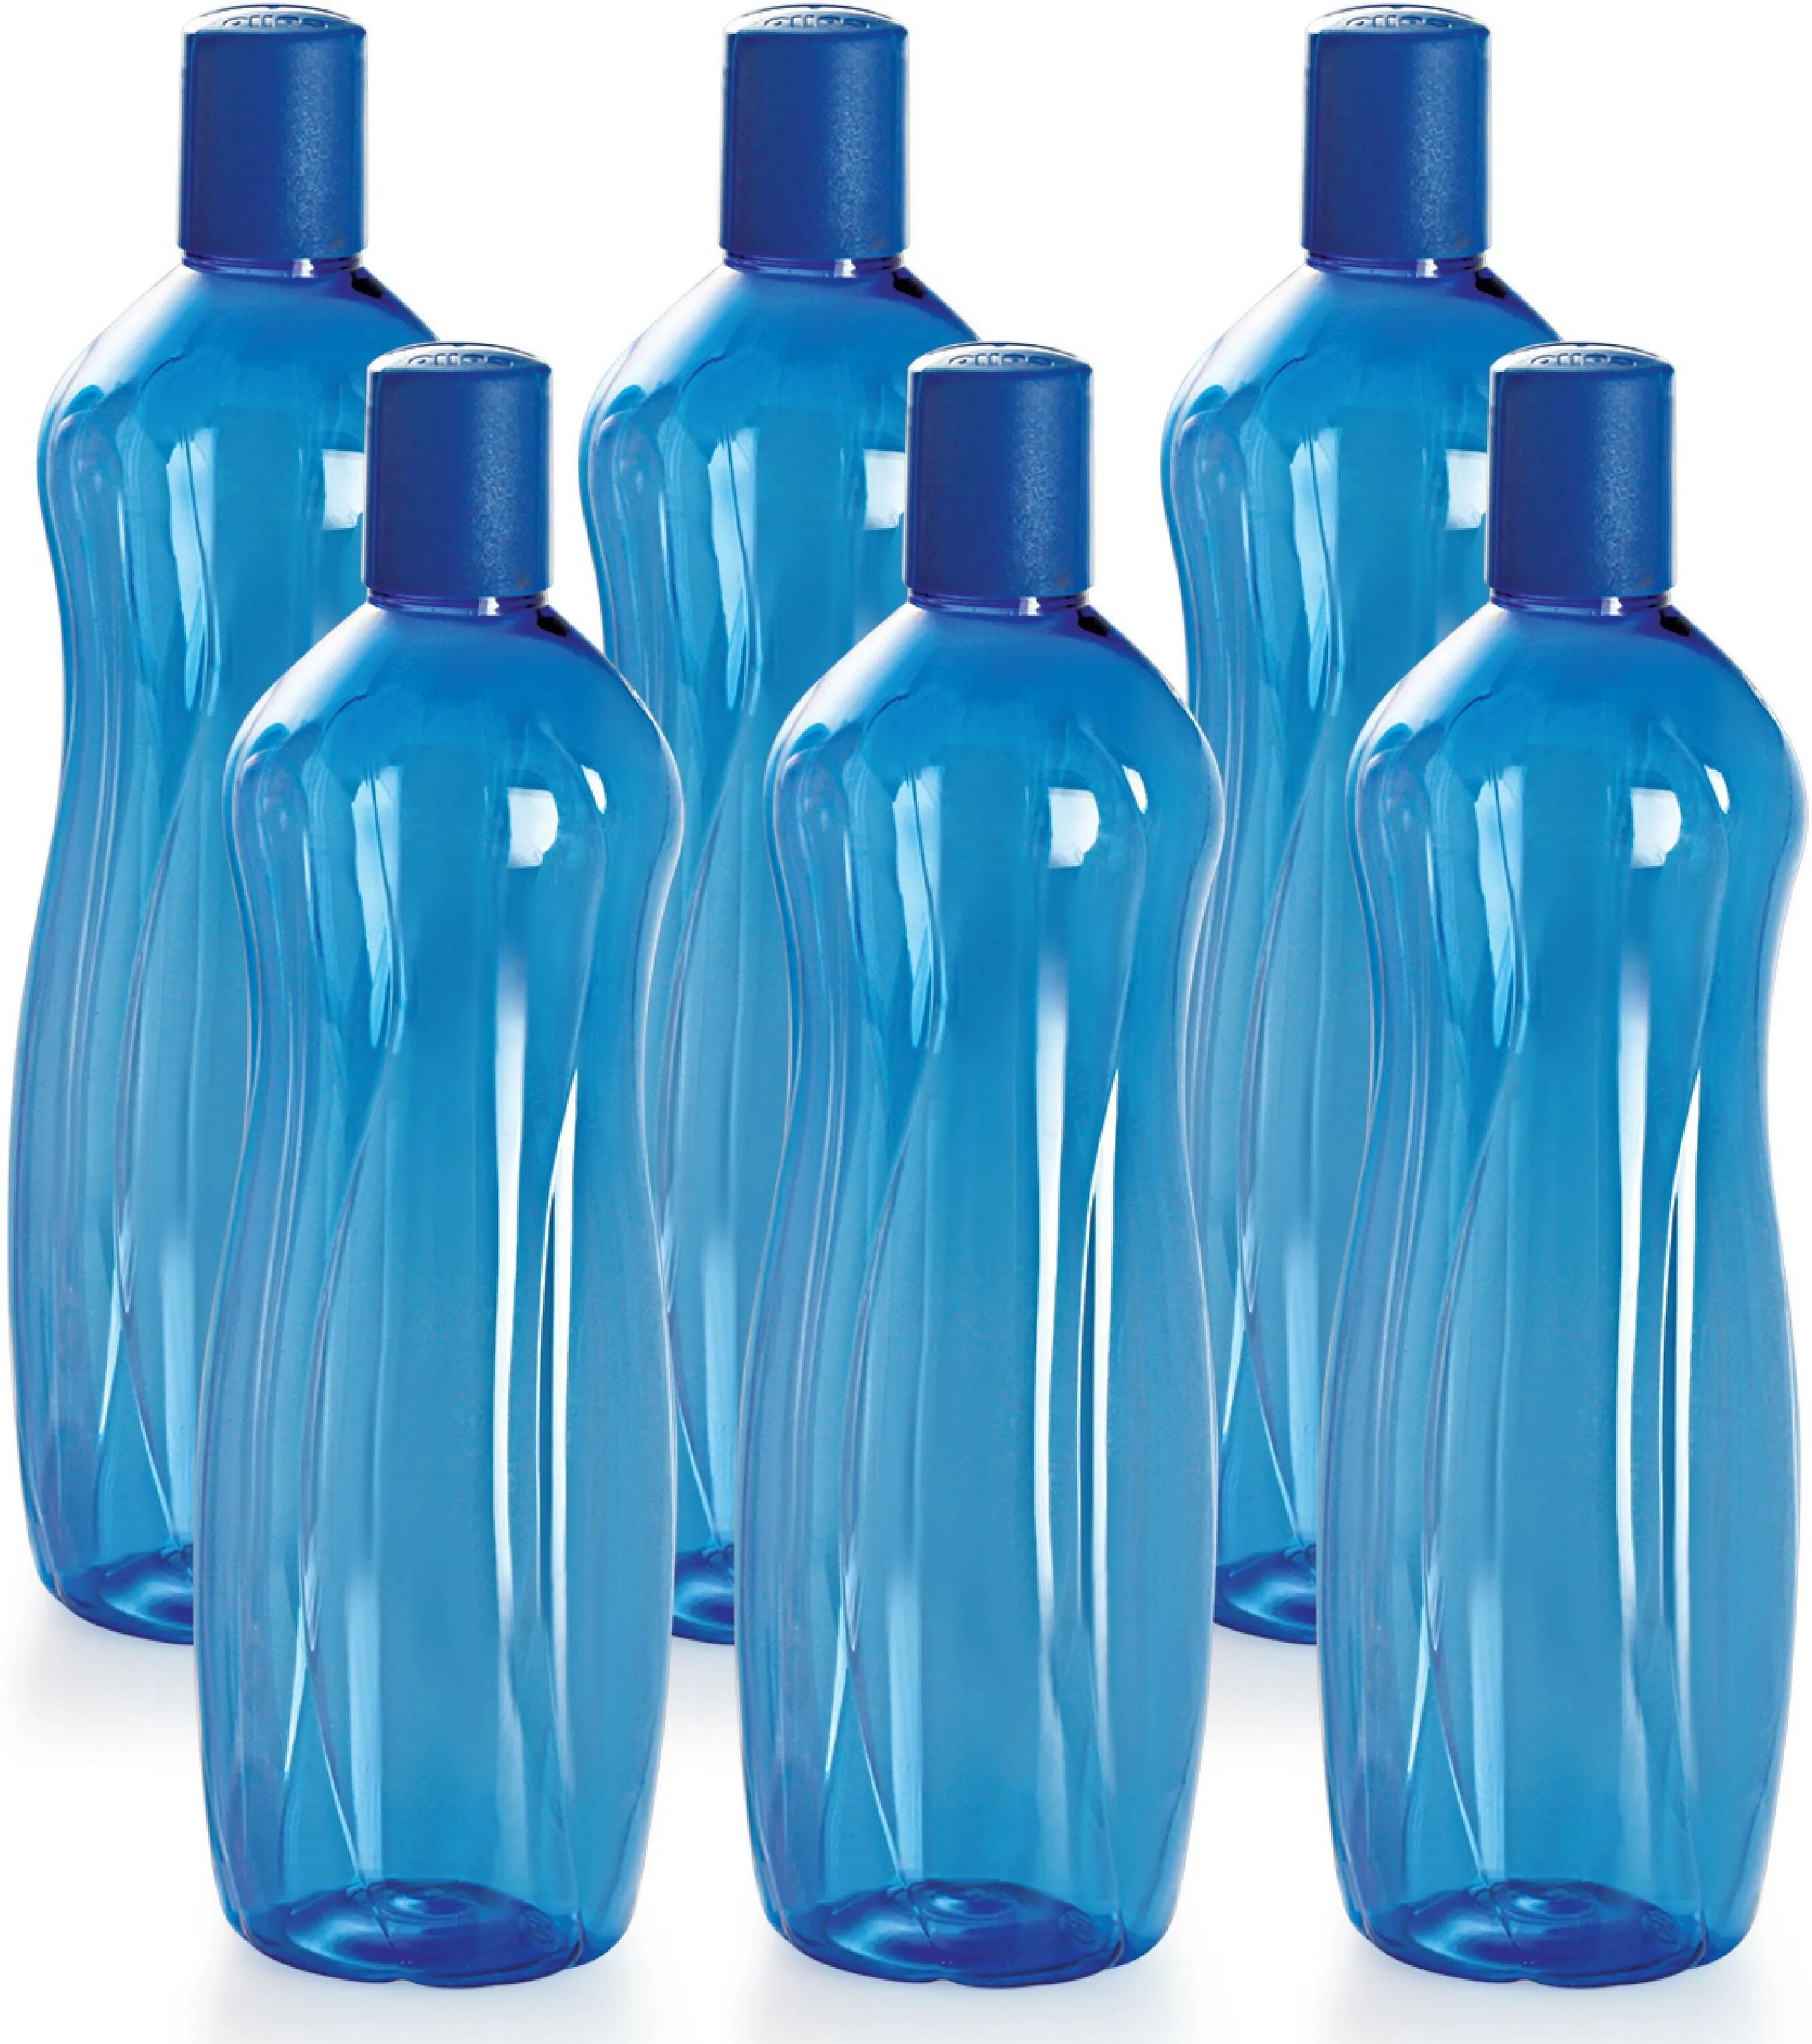 ПЭТ бутылки. Бутылка пластиковая голубая. Pet бутылки. Формы бутылок для воды.